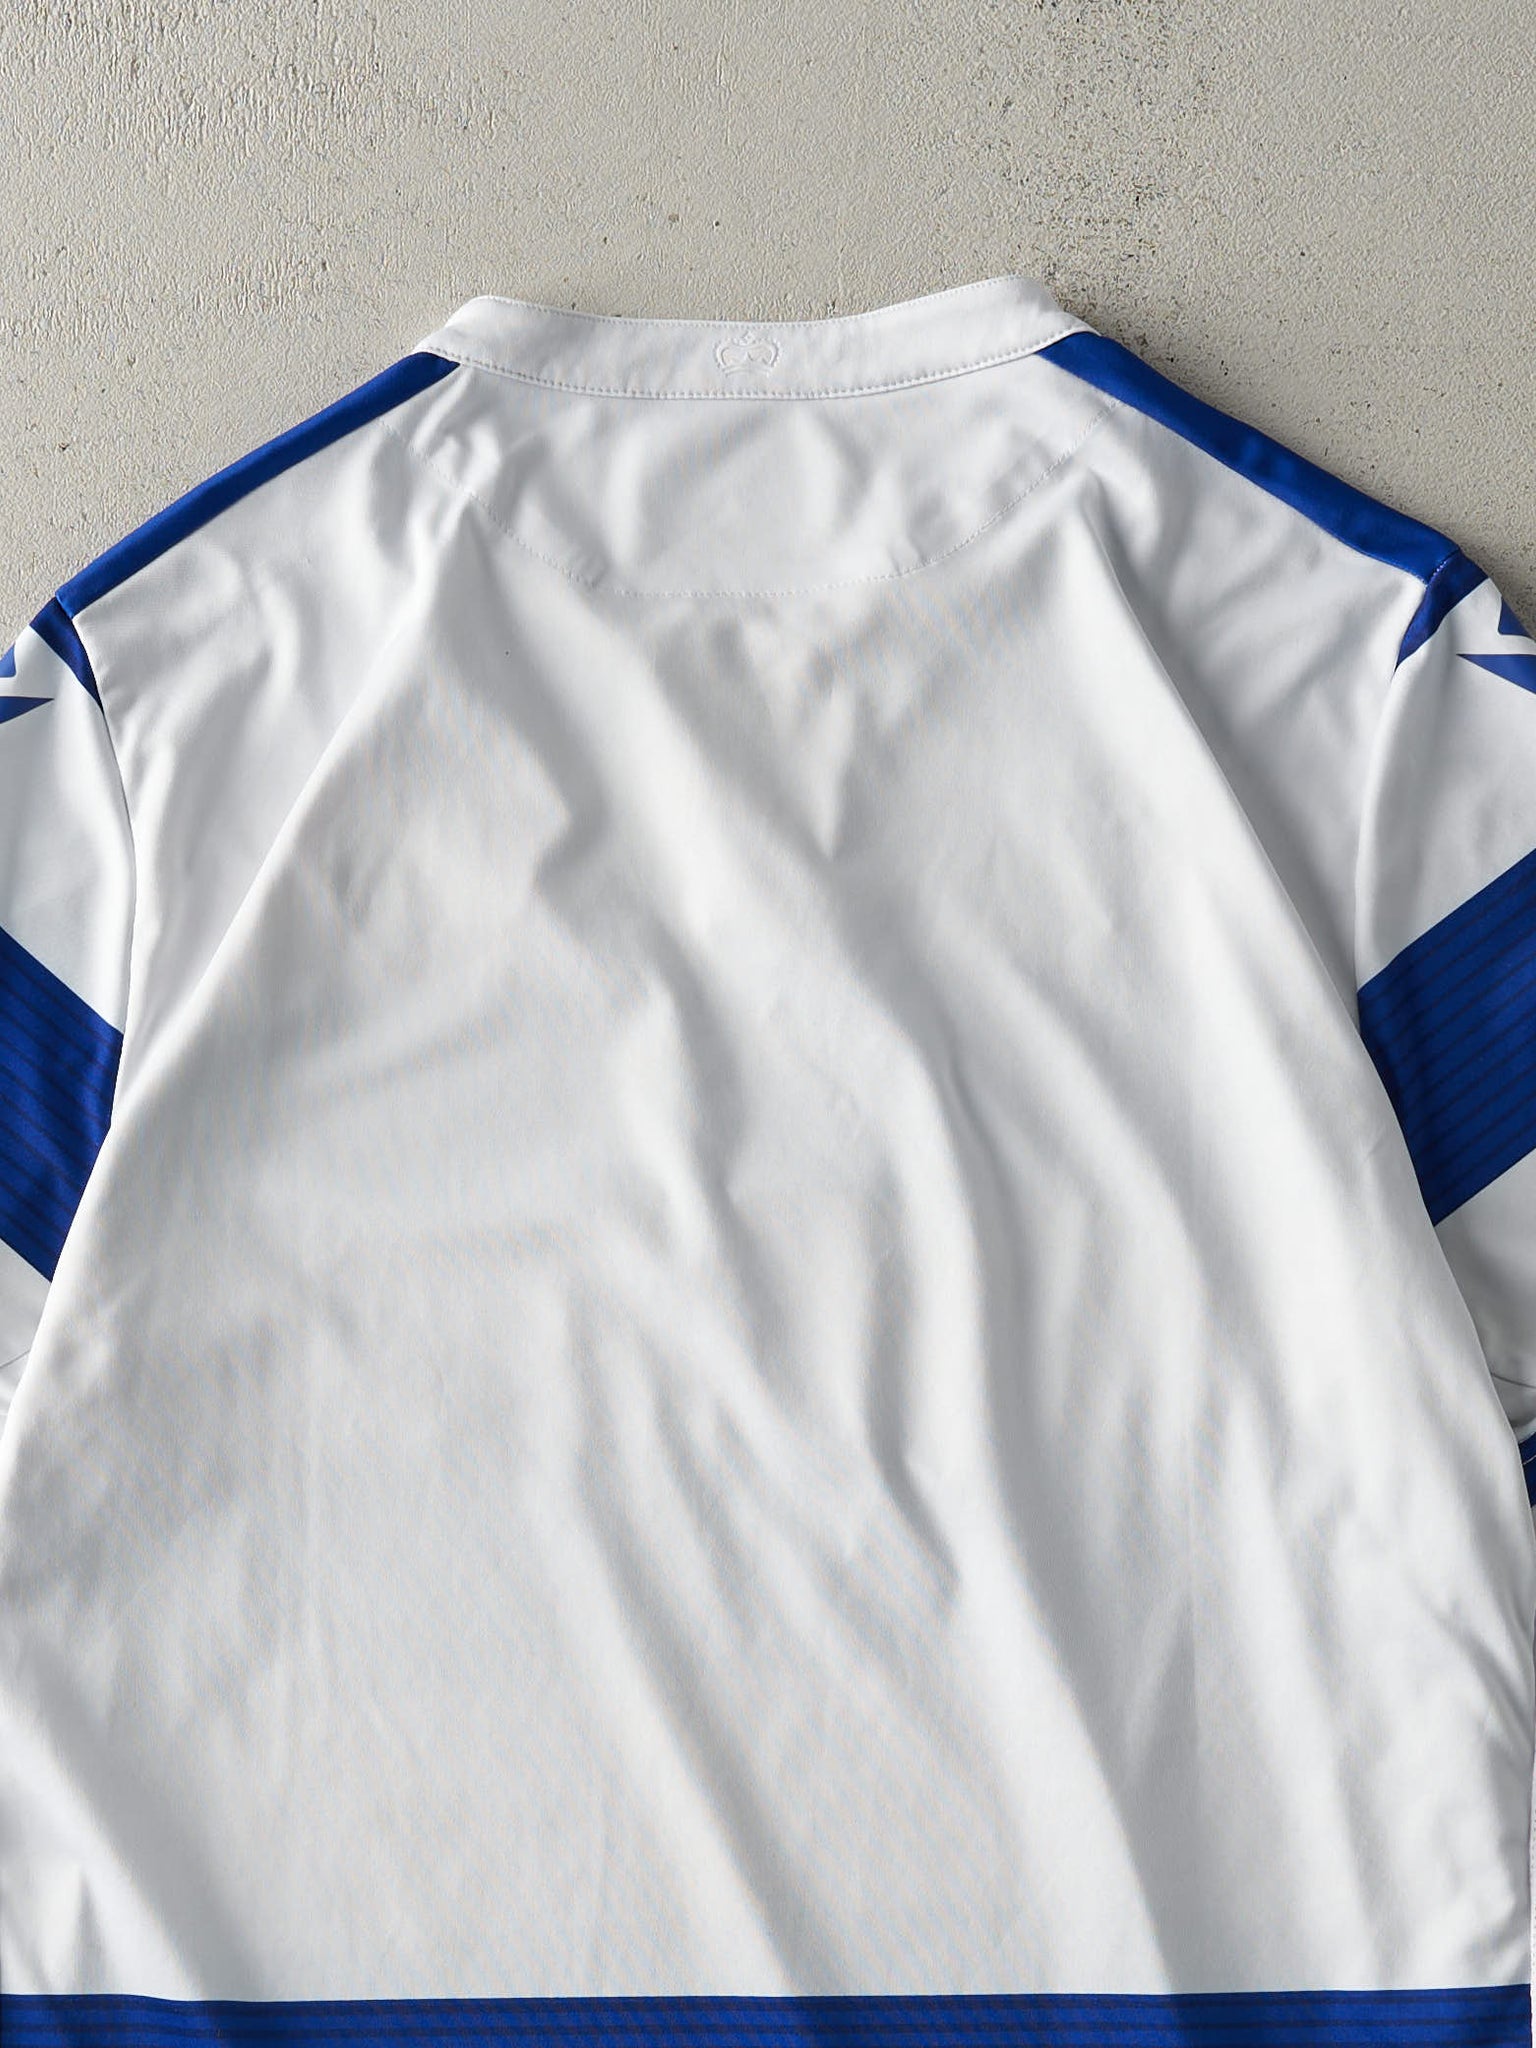 Vintage 90s White & Blue Striped Reading F.C. Soccer Jersey (L)